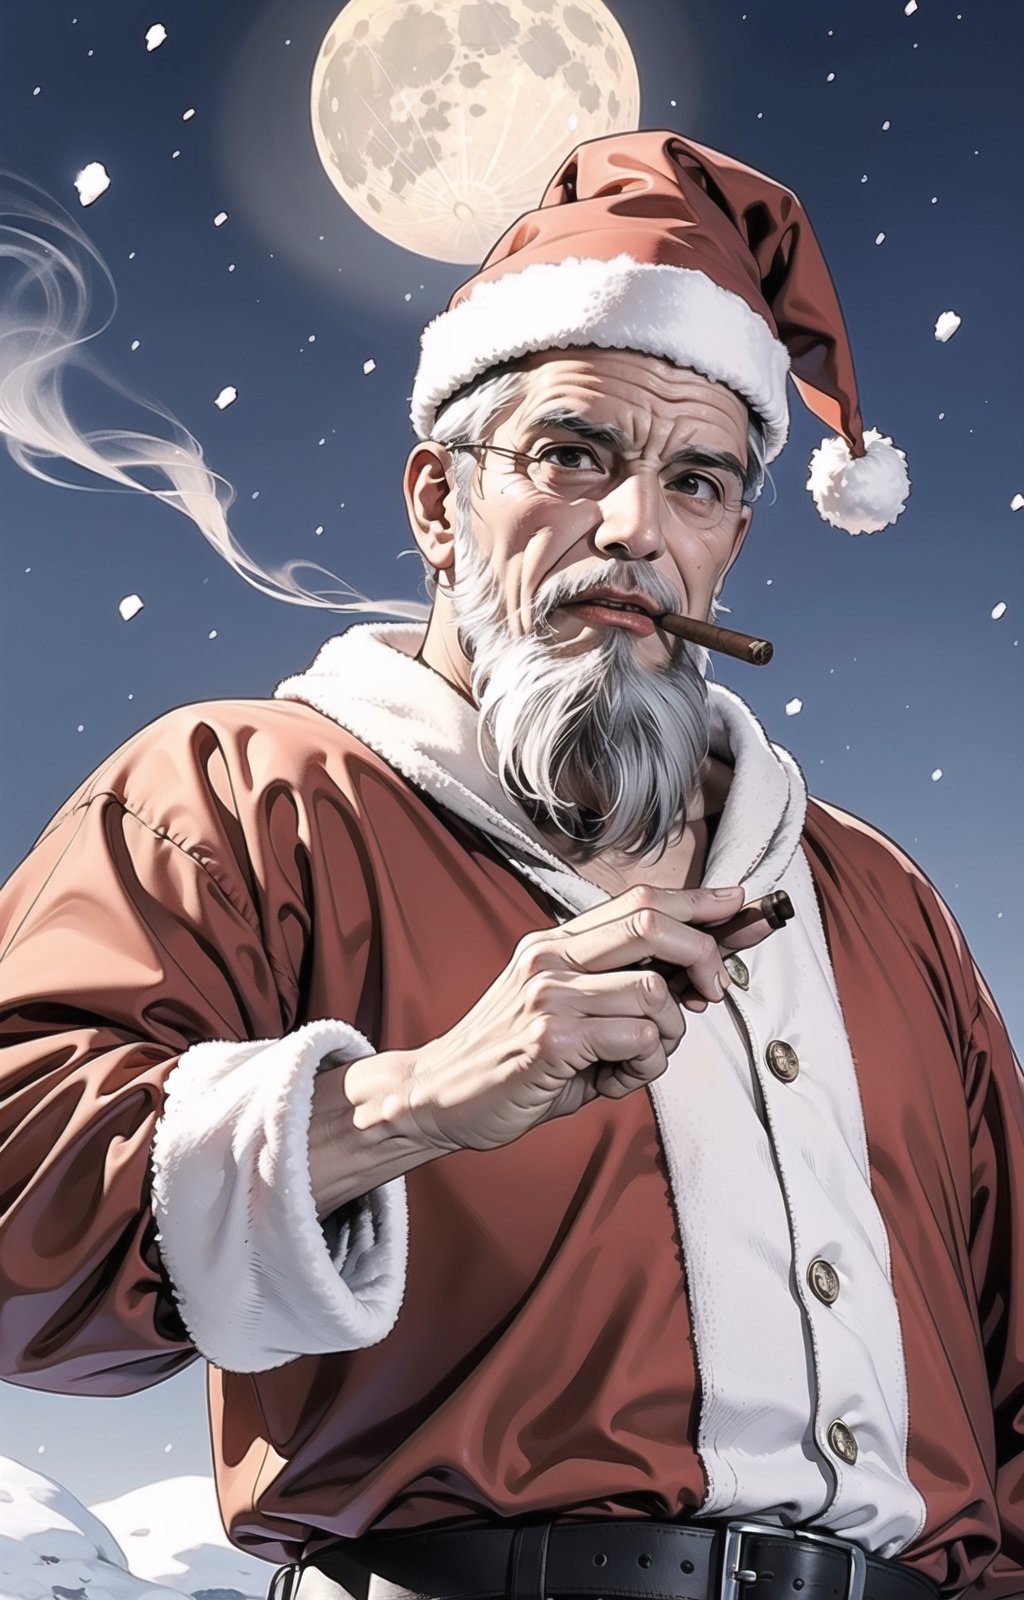 solo,((old man)),Santa Claus beard,(cowboy shot:1.2),santa hat,Naked upper body,(muscular),Mouth smoking a cigar,falling_snow,moon,night_sky,boichi manga style